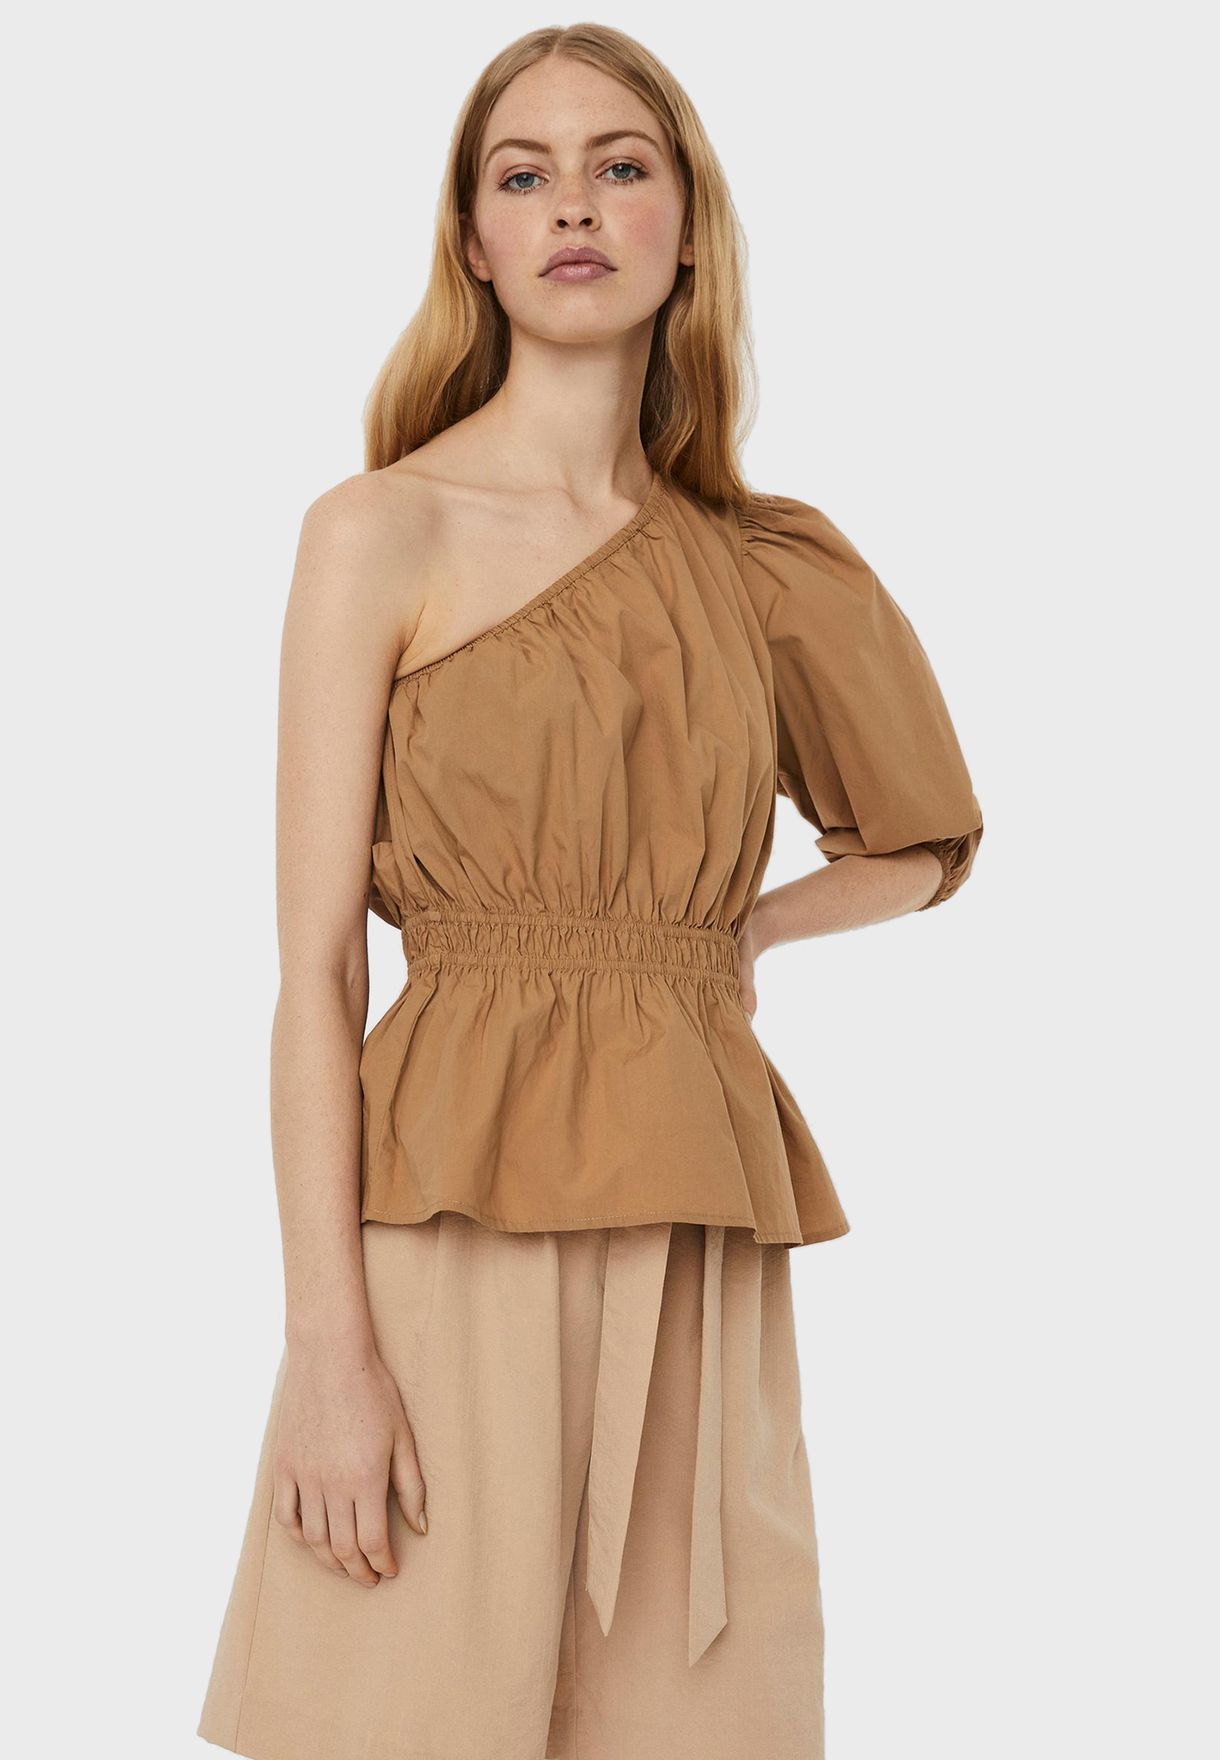 Duchess længde manuskript Buy Vero Moda brown One Shoulder Top for Women in Dubai, Abu Dhabi -  10200000